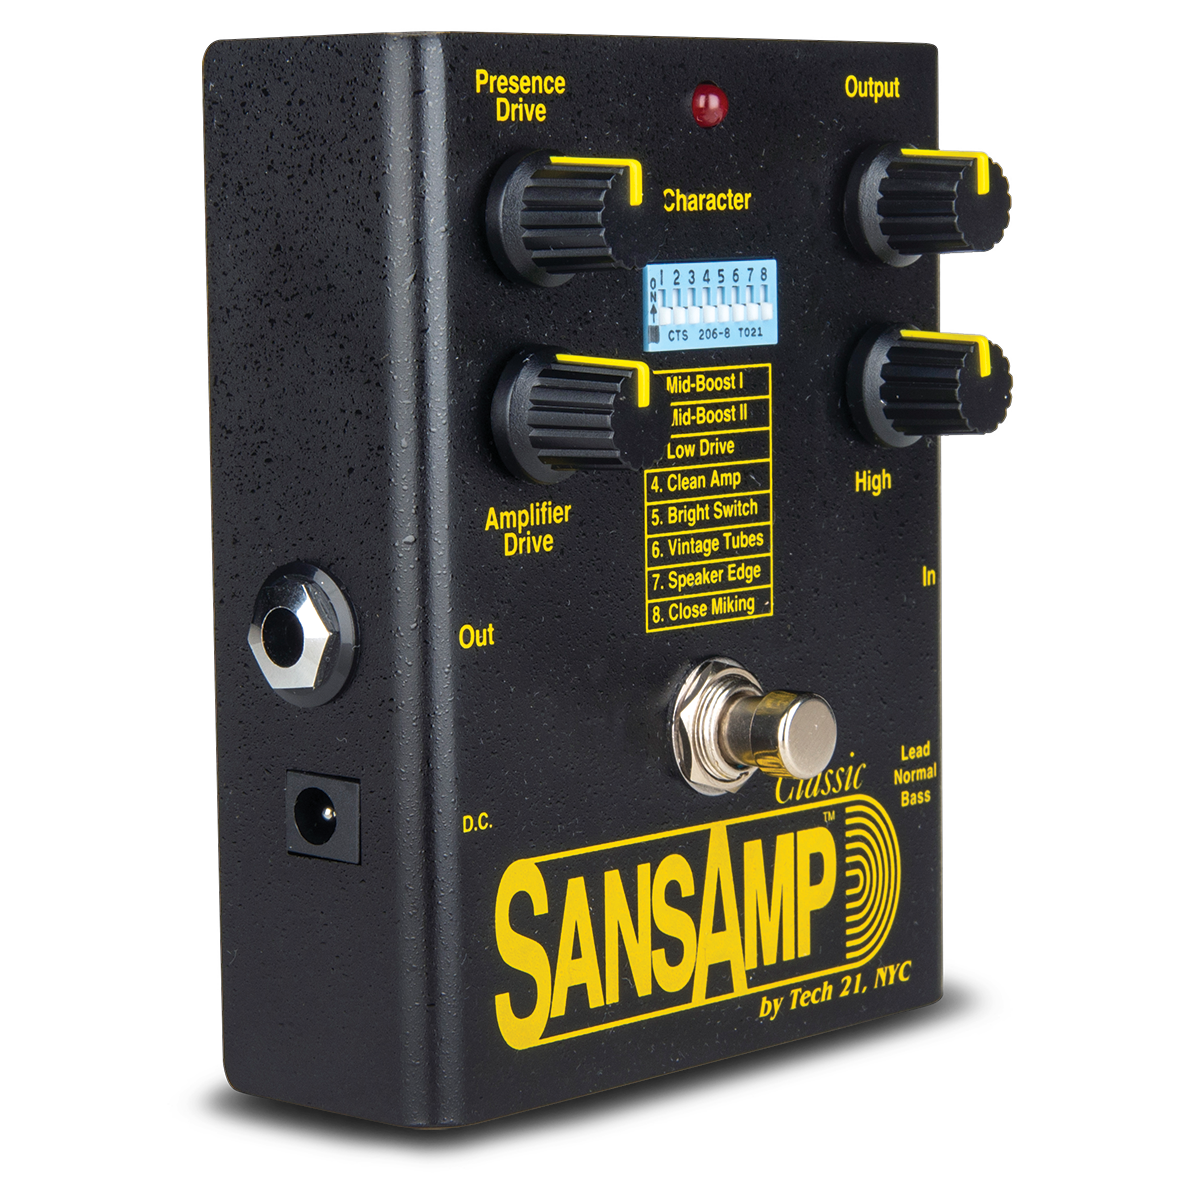 Tech 21 Sansamp SA1 Classic Pedal Reissue 2021